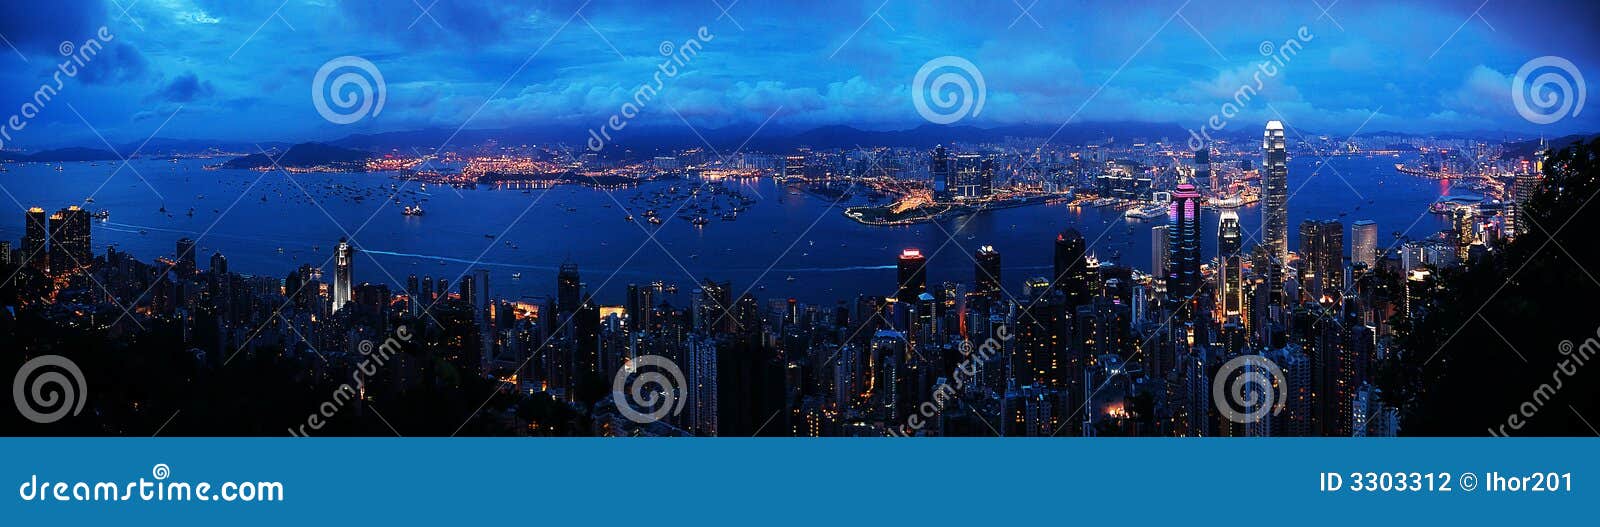 hong kong panorama -night view